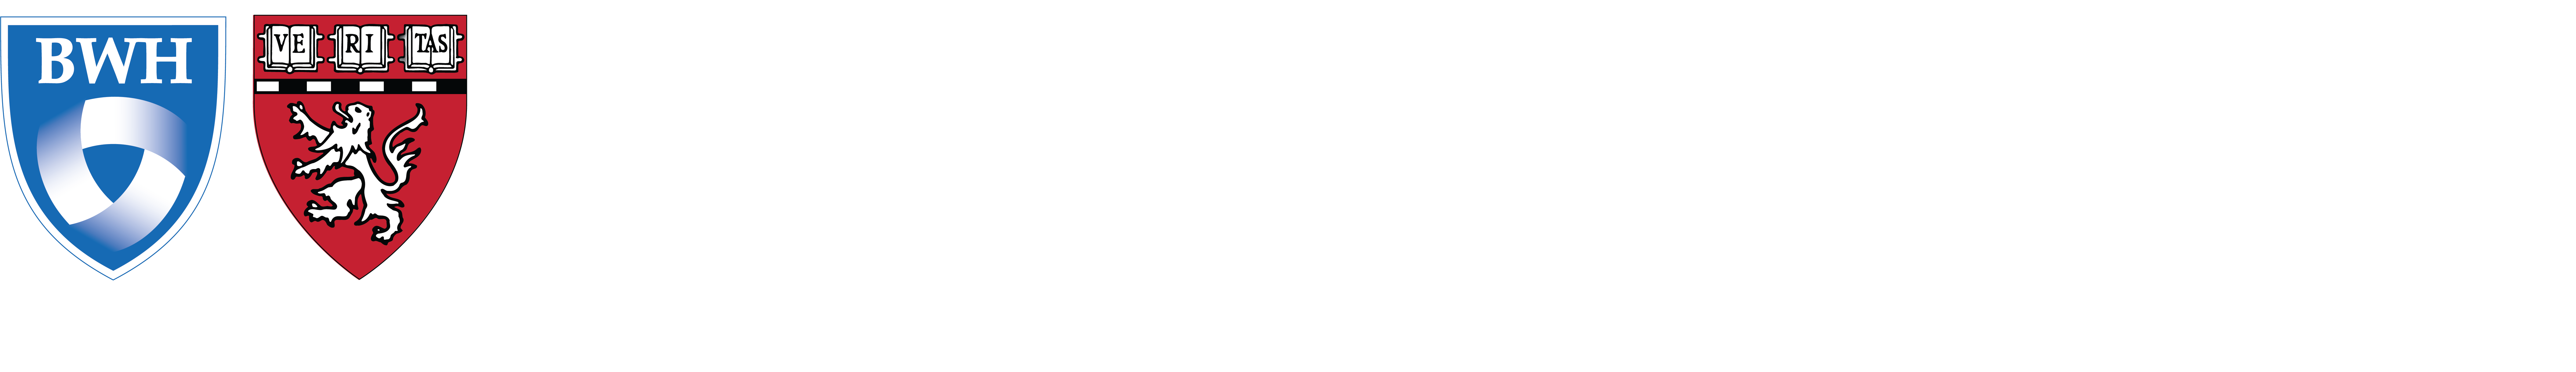 Epigenomedicine